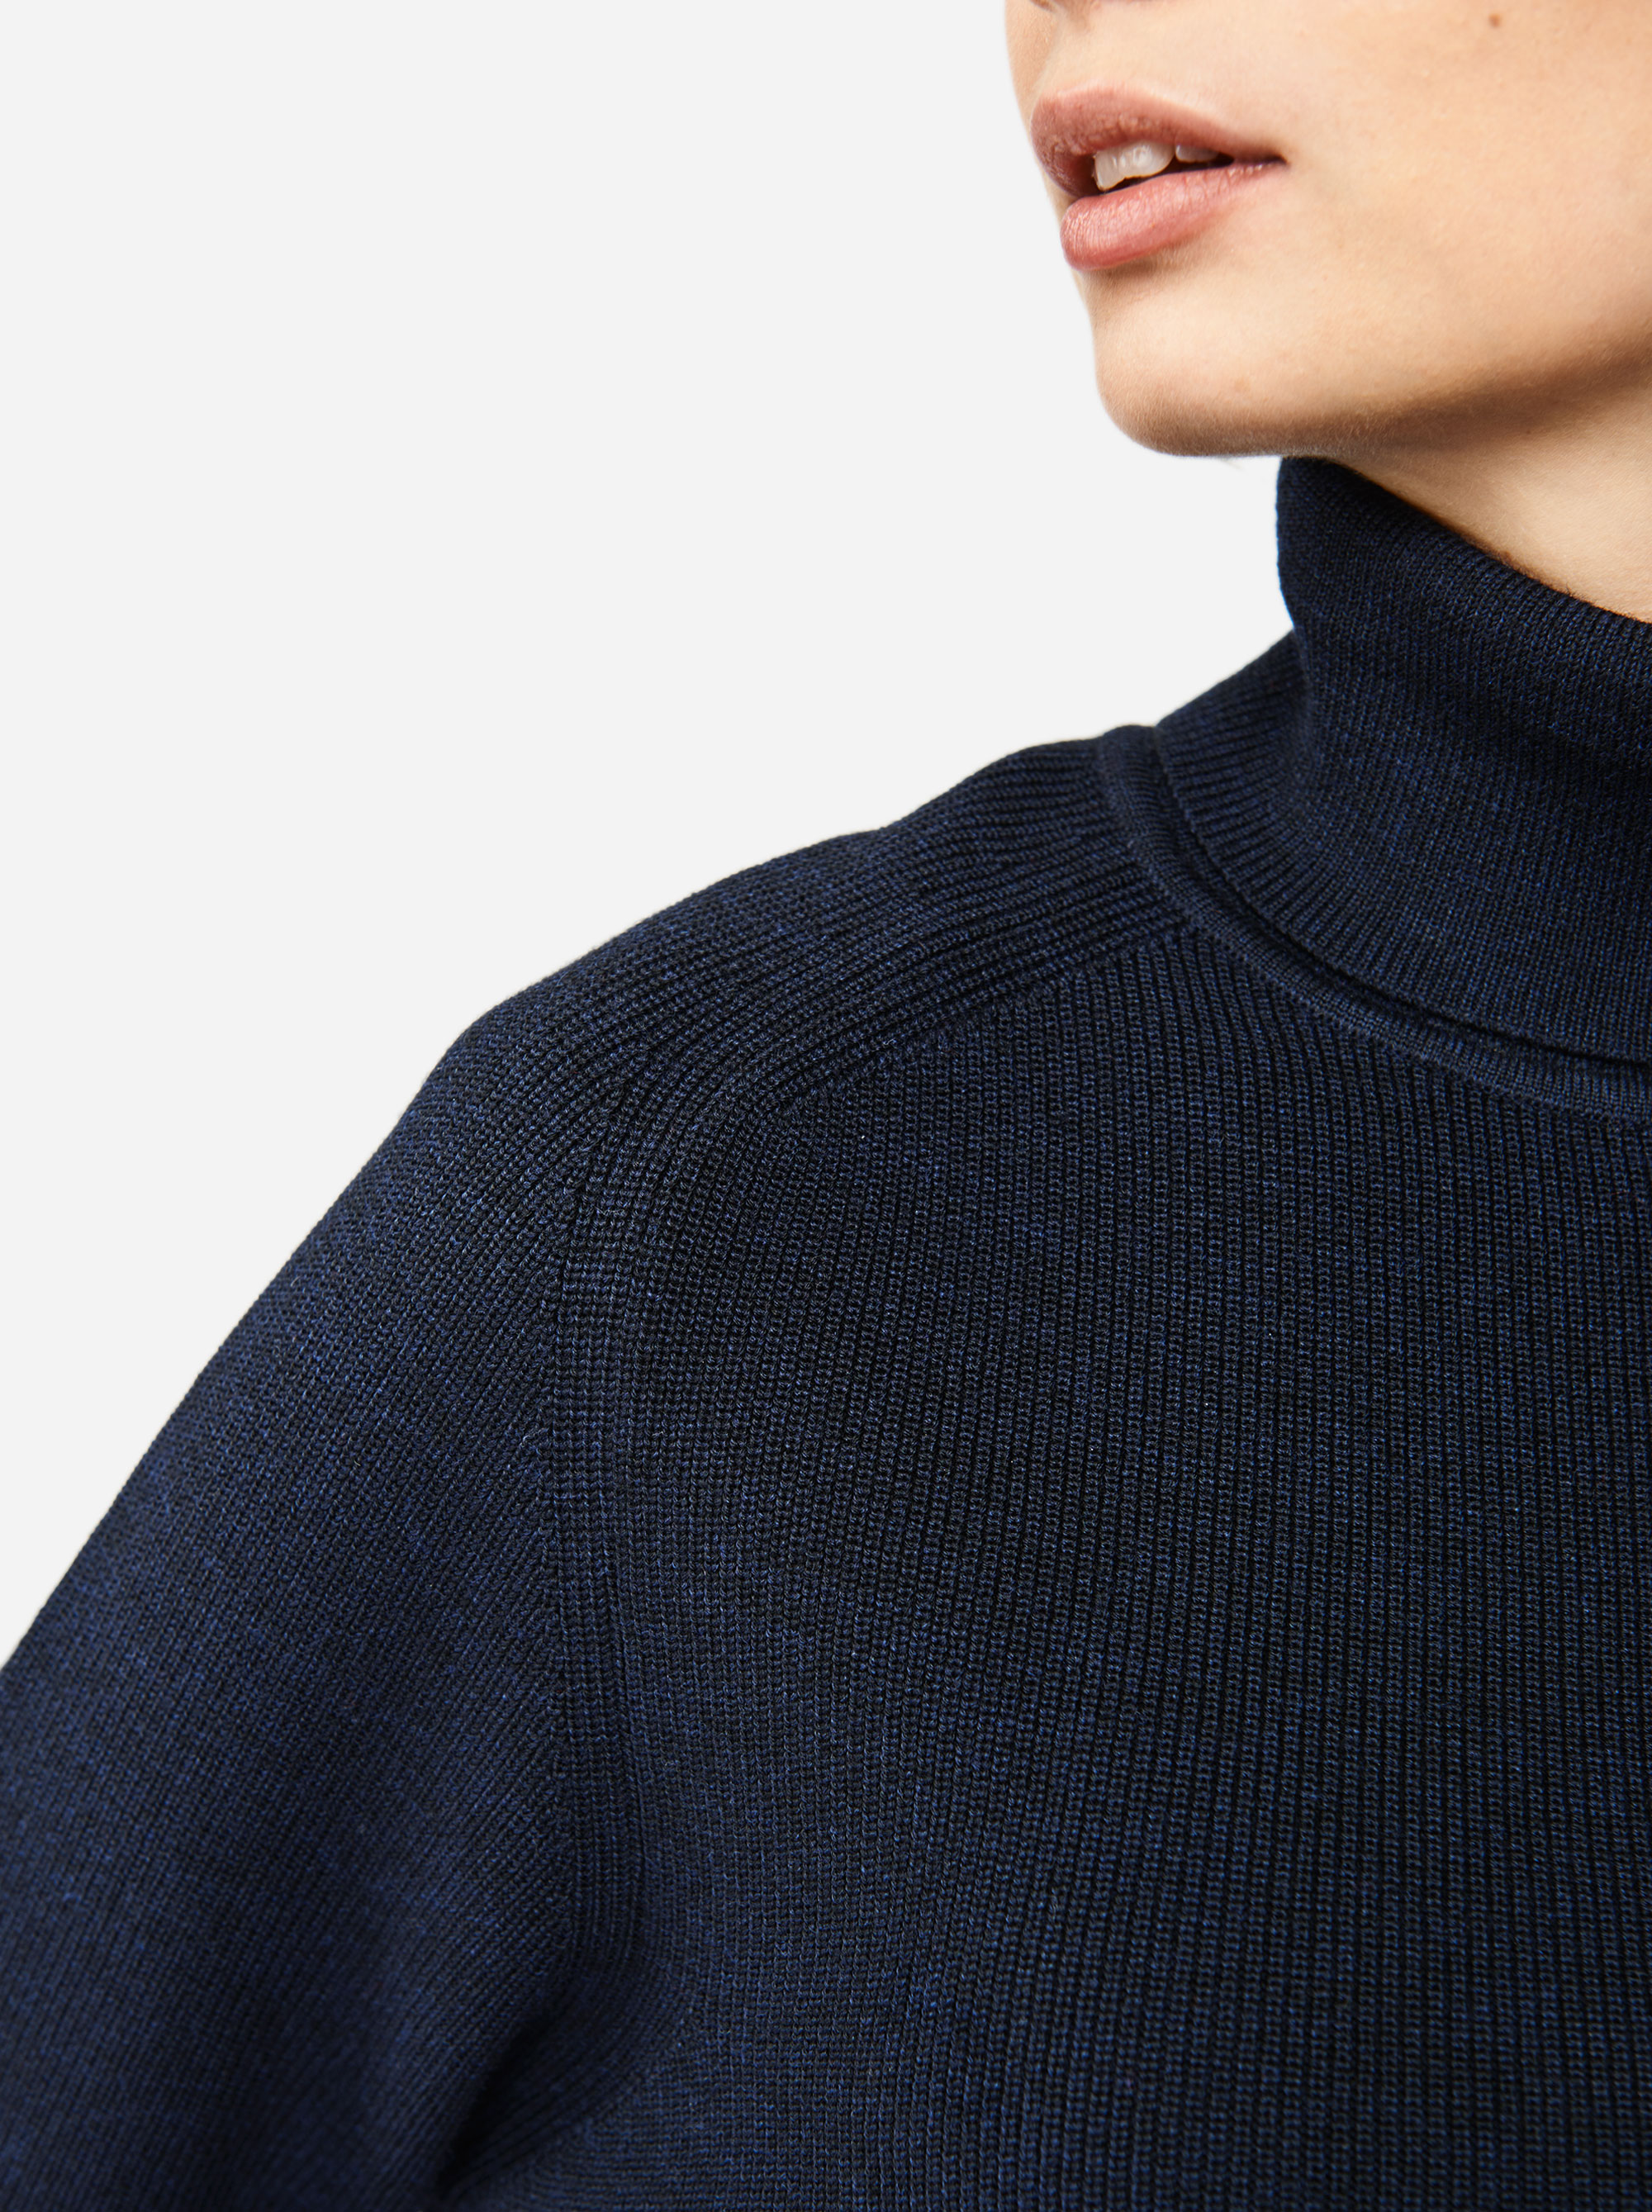 Teym - Turtleneck - The Merino Sweater - Men - Blue - 3